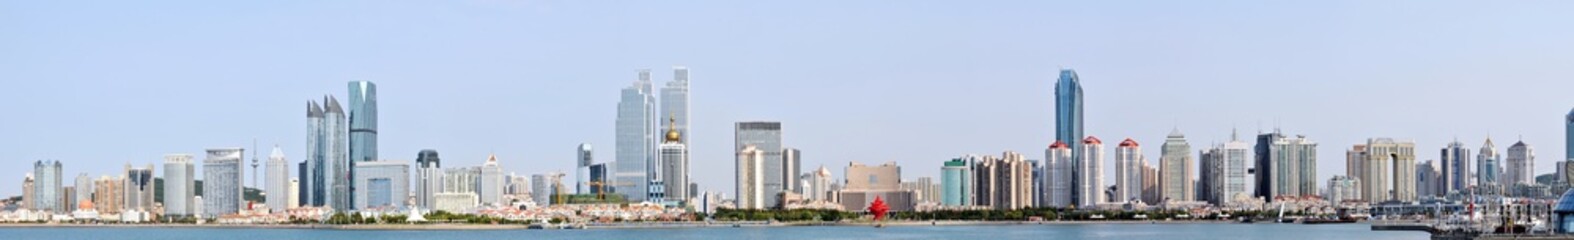 Panoramic views of the city of Qingdao